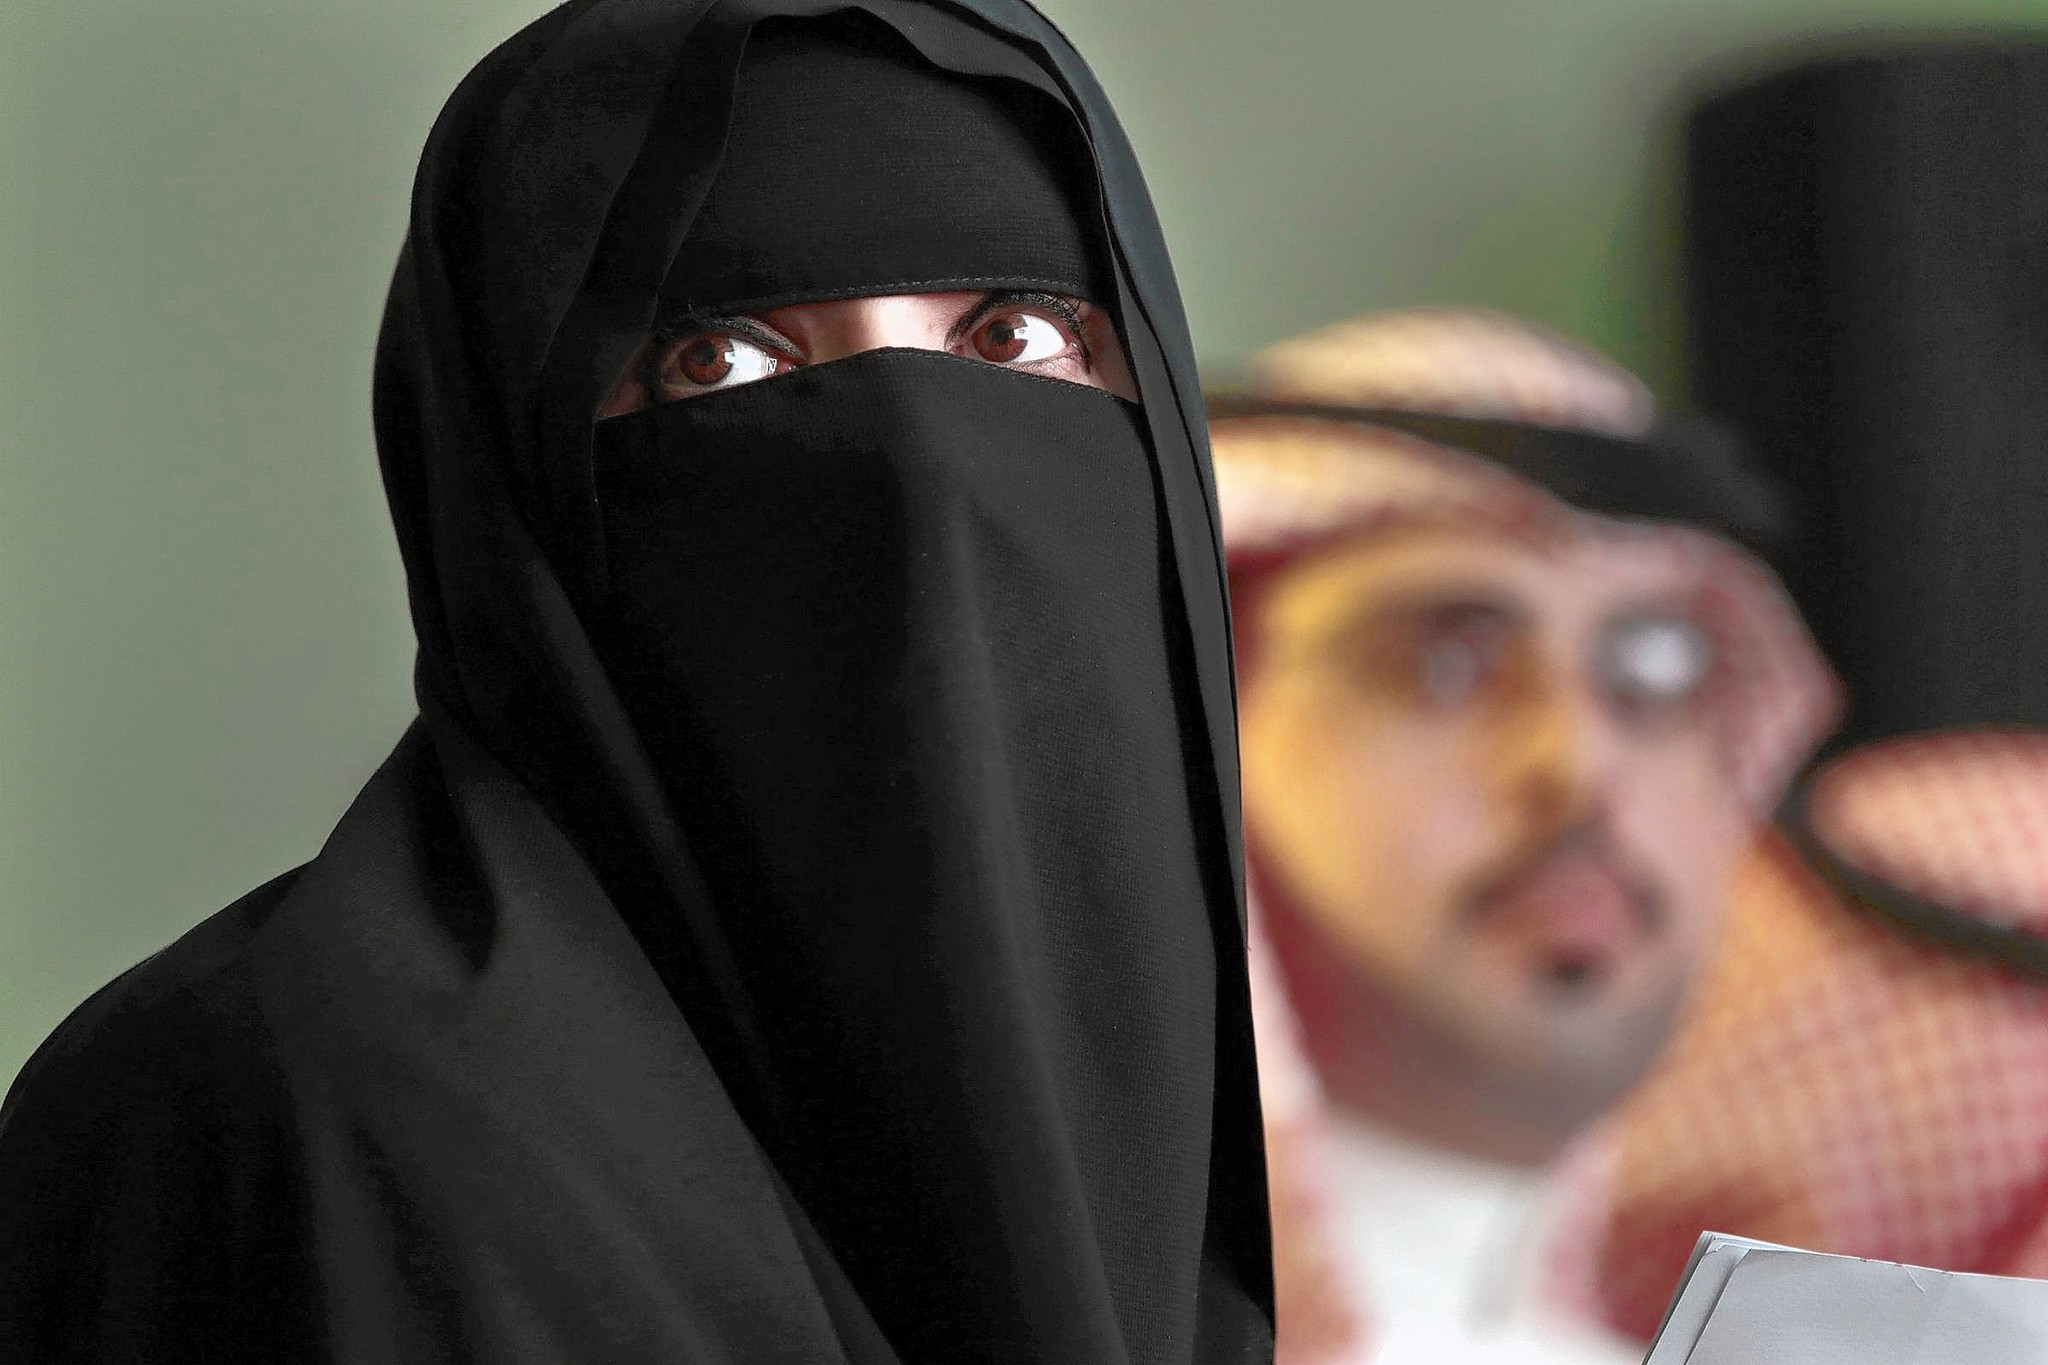 Saudi Women Find Ways Into The Workplace Chicago Tribune